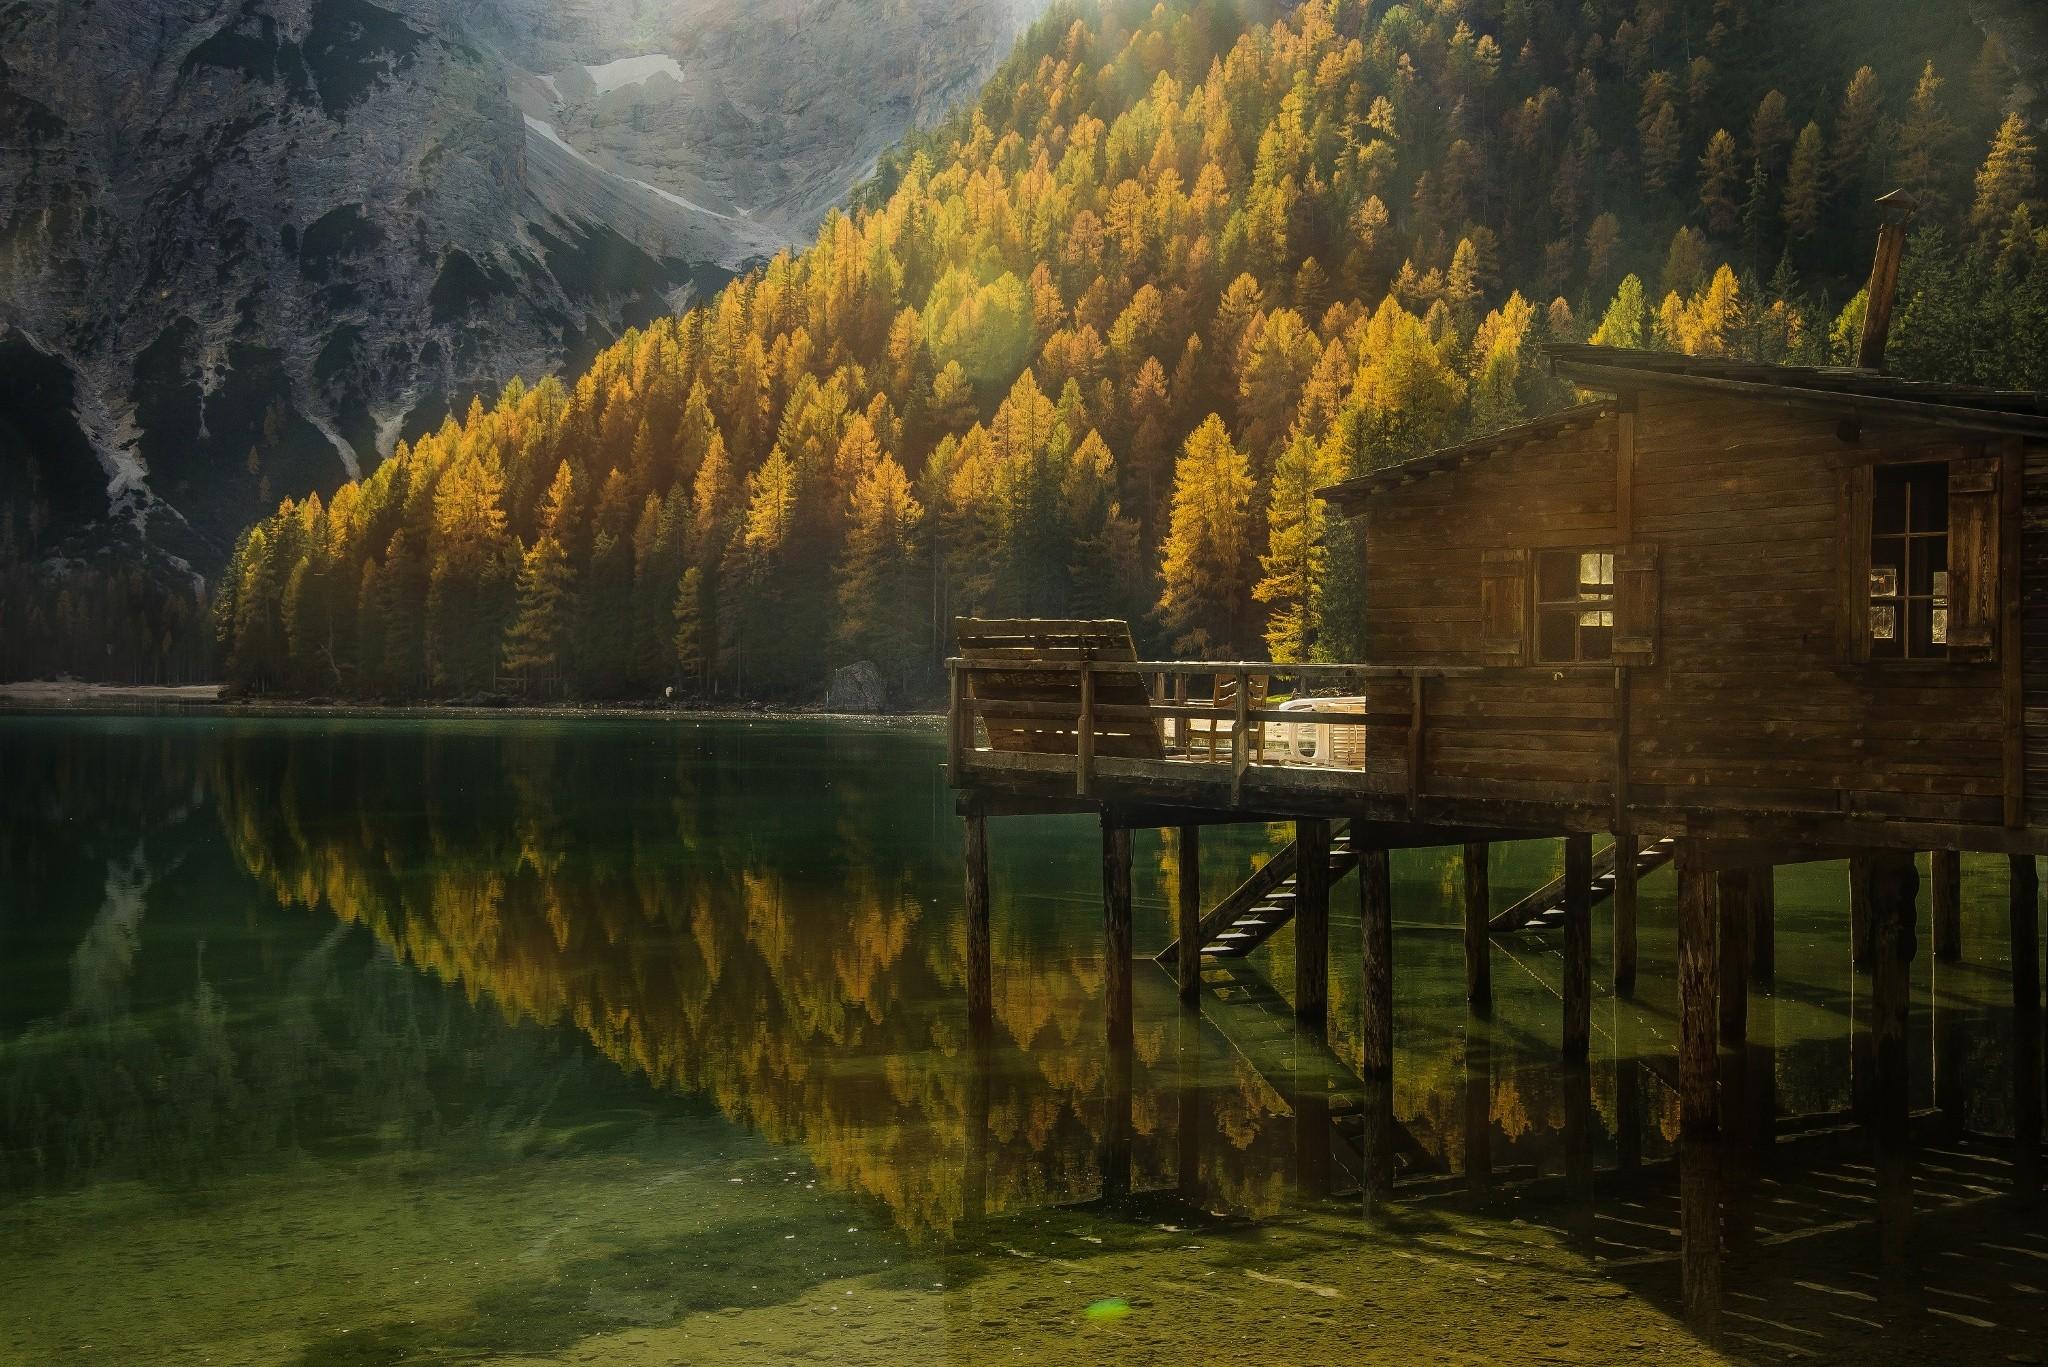 #Italy, #mountains, #reflection, #landscape, #lake, #nature